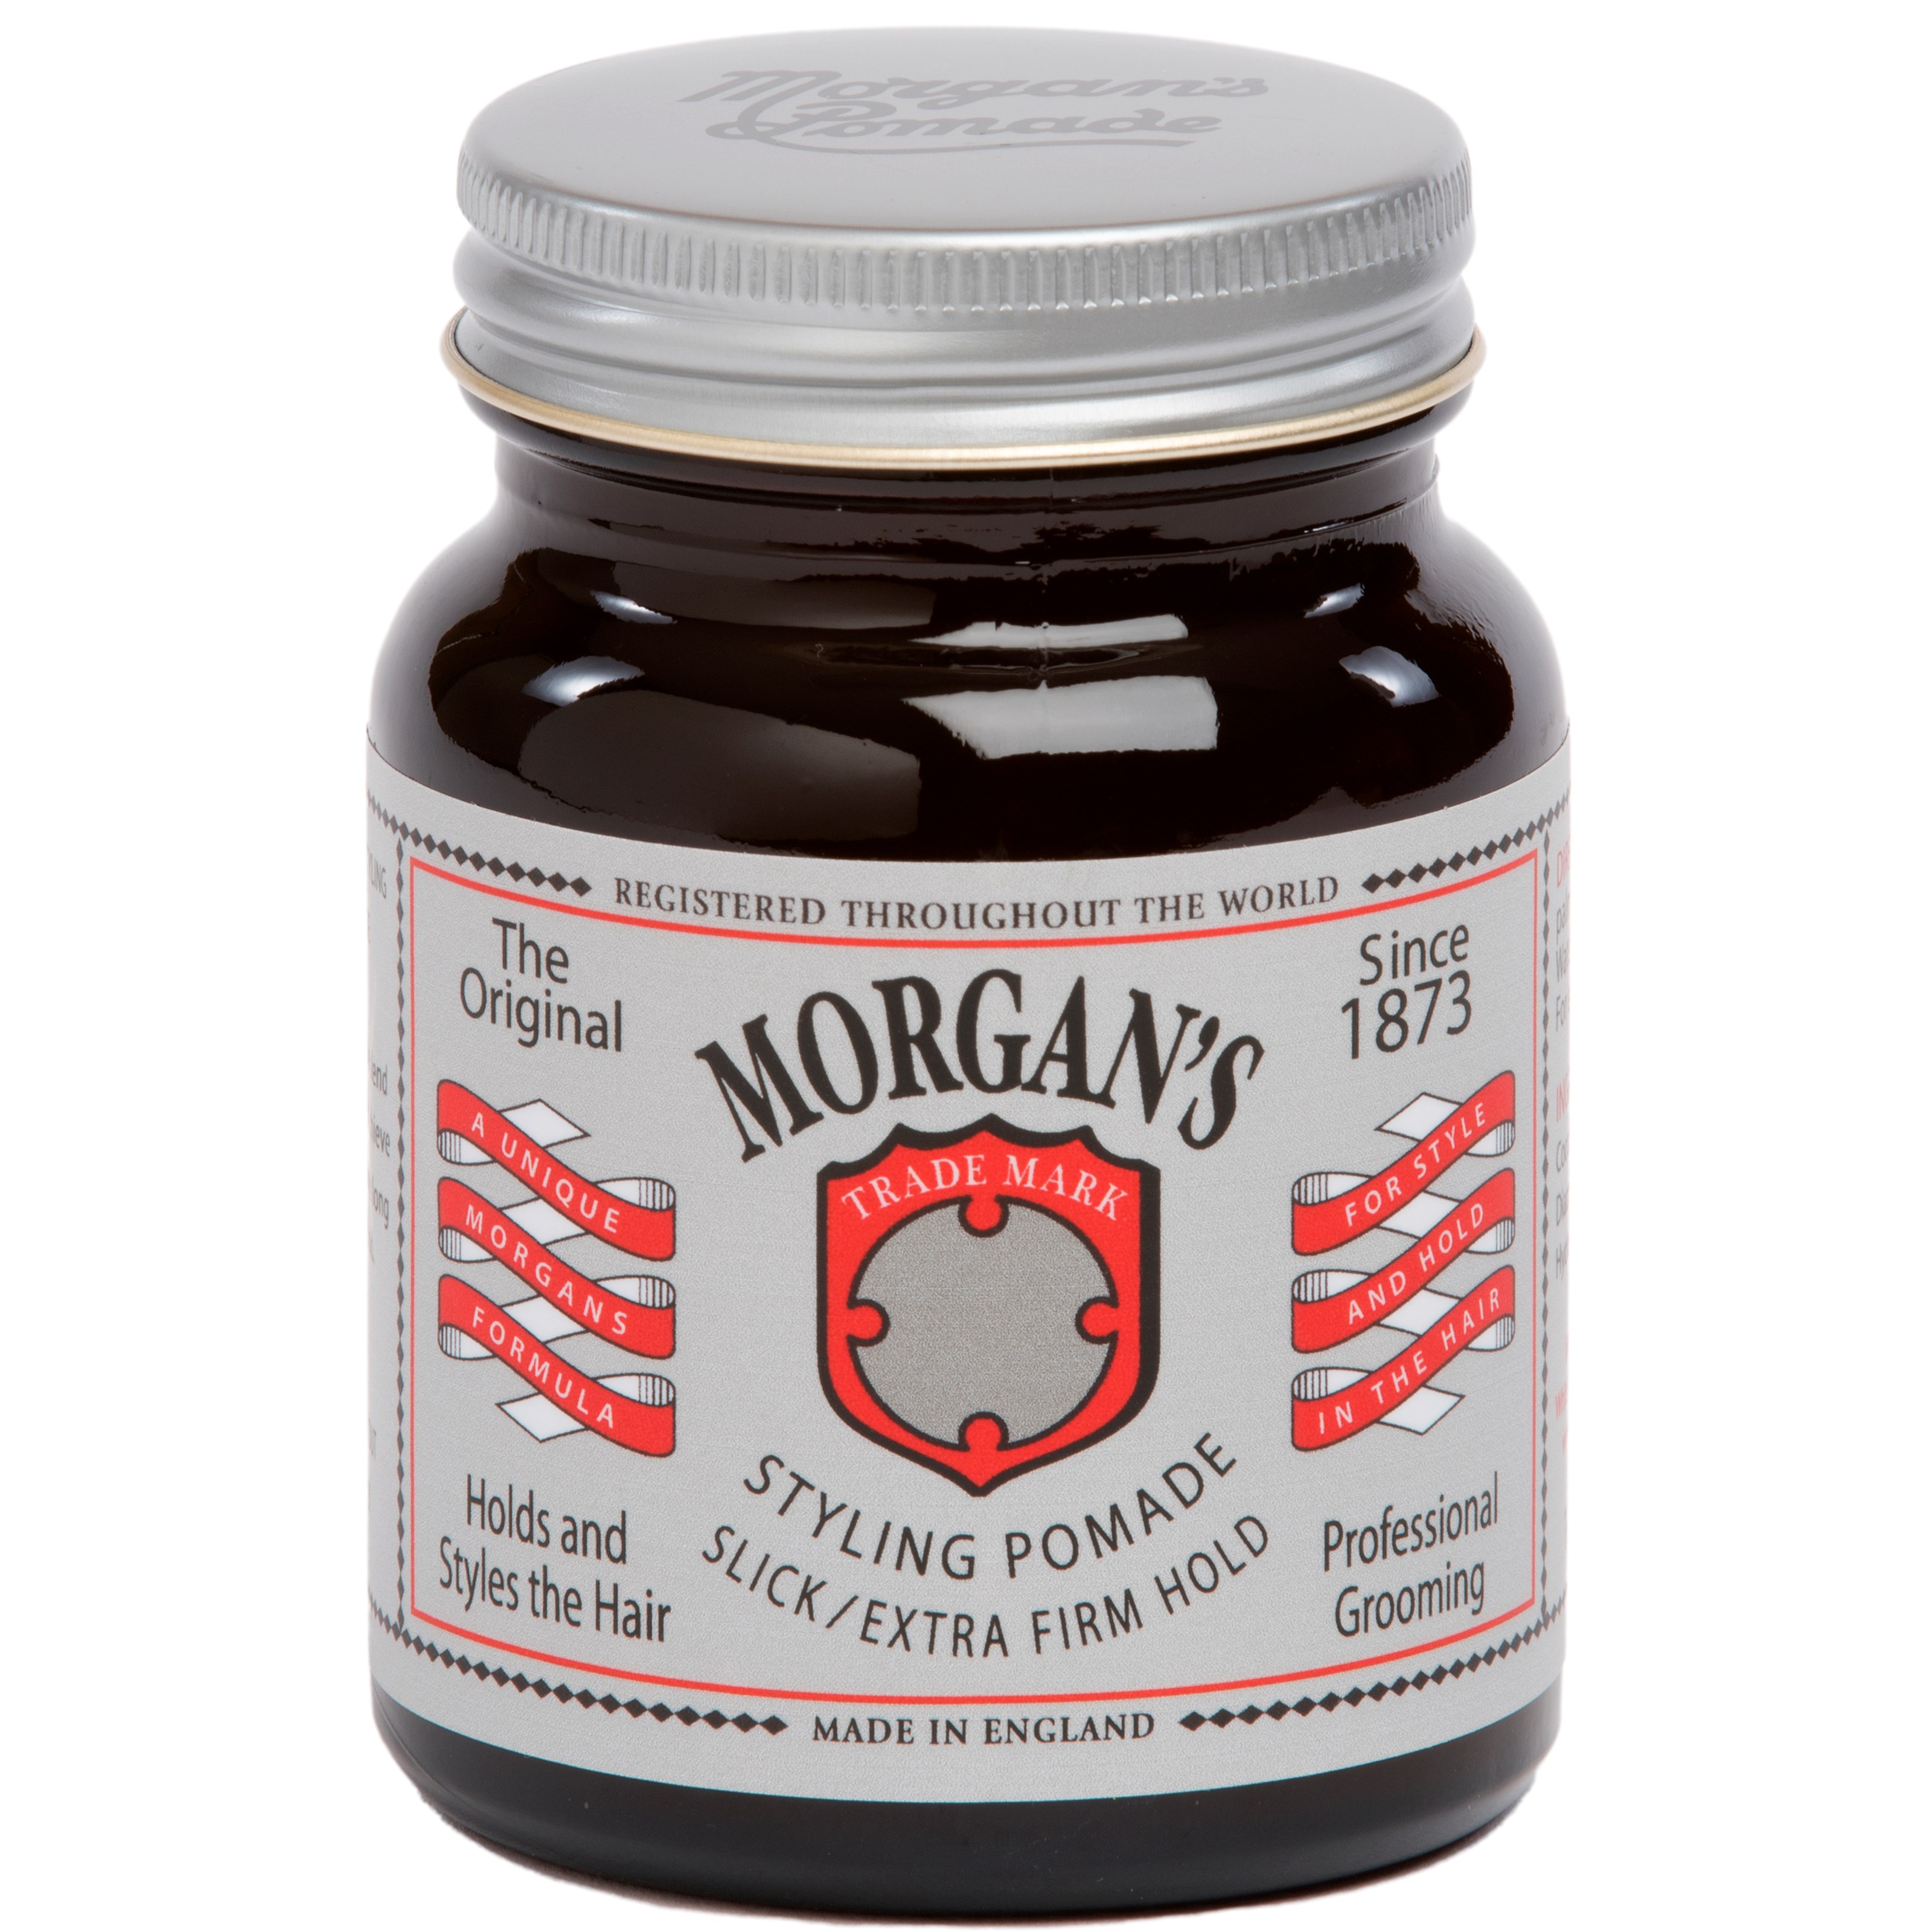 Läs mer om Morgans Pomade Styling Pomade Silver Label - Slick Extra Firm Hold